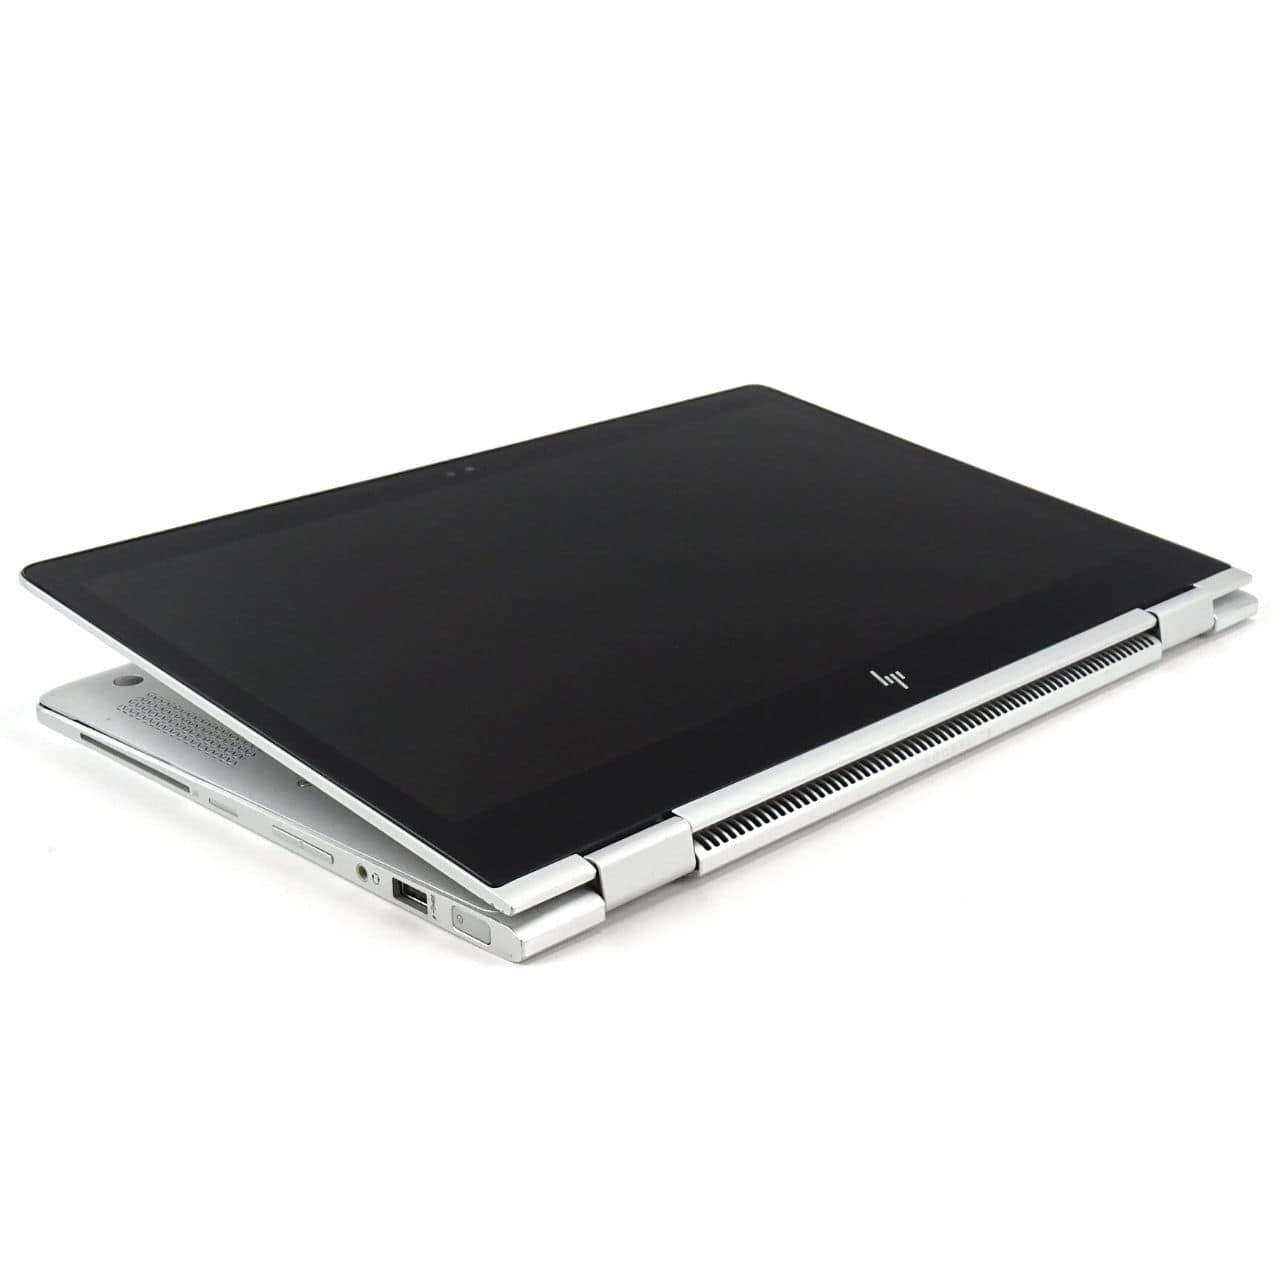 HP EliteBook x360 1030 G2 

 - 13,3 Zoll - Intel Core i5 7300U @ 2,6 GHz - 8 GB - 256 GB SSD - 1920 x 1080 FHD - Touchscreen - Windows 10 Professional - Sehr gut